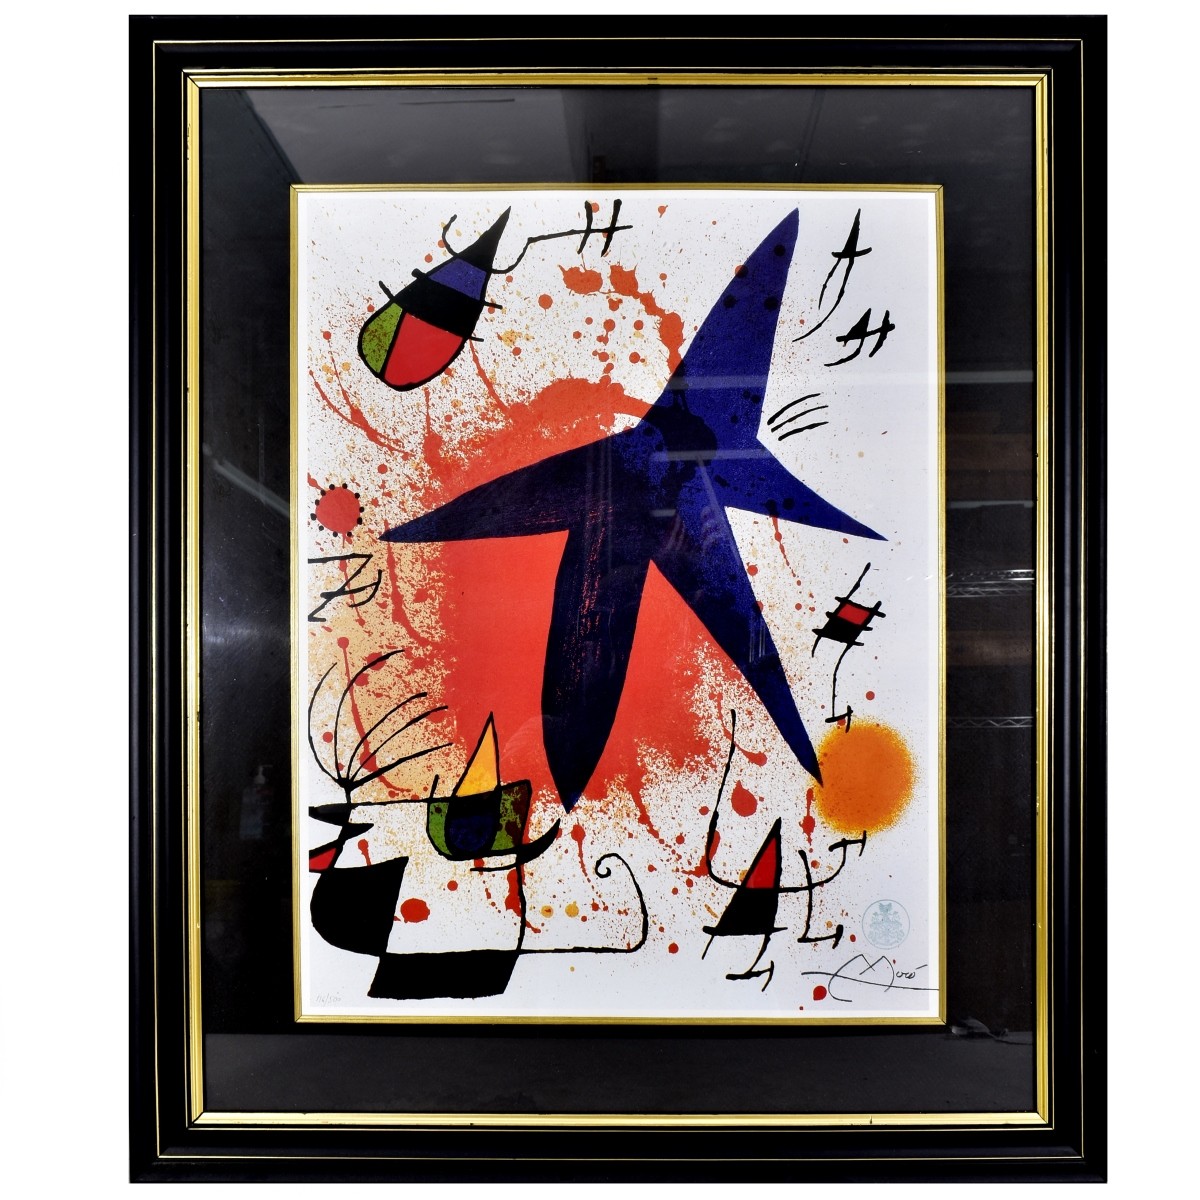 Joan Miro (1893 - 1983)